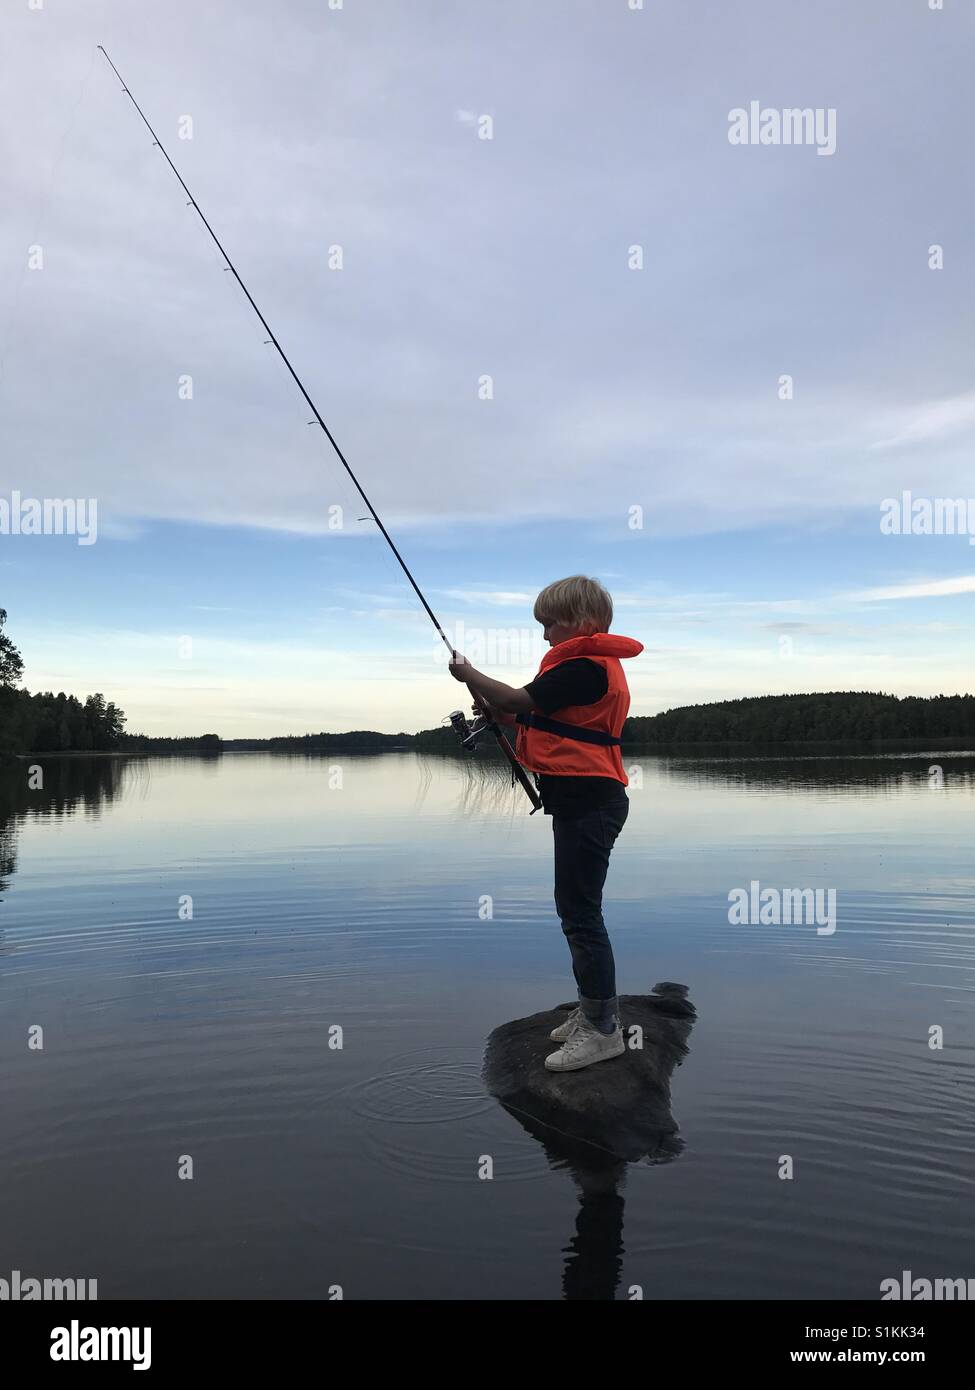 Skyline fishing Island life jacket fishing rod lake sky magic still Water summer boy athmosphere Stock Photo